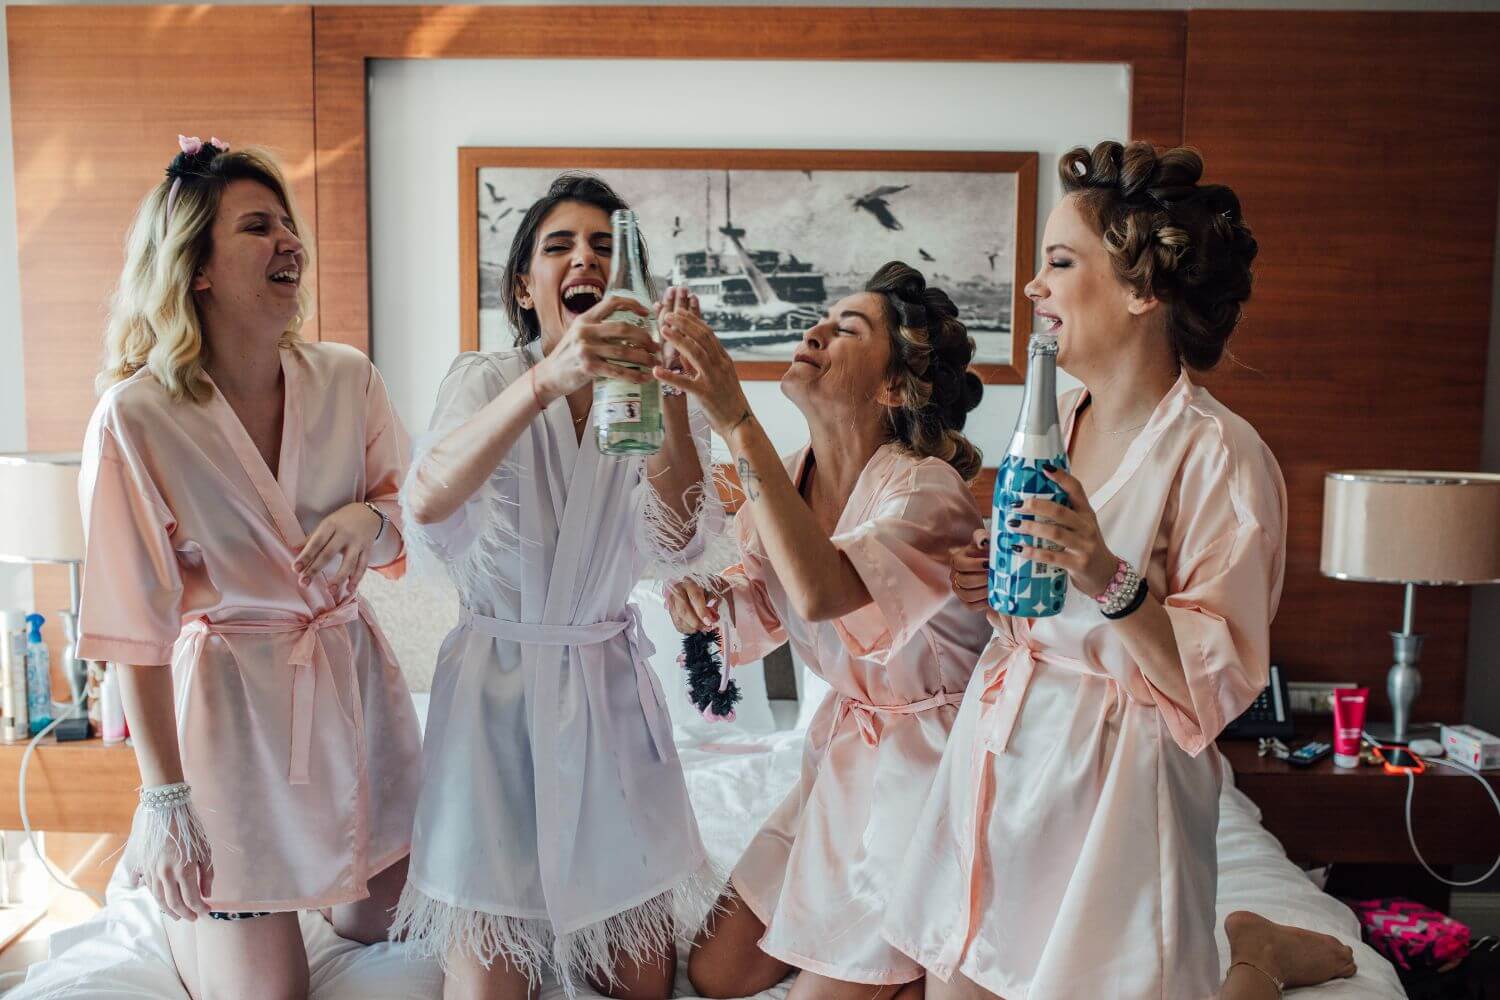 Girls drinking at the wedding